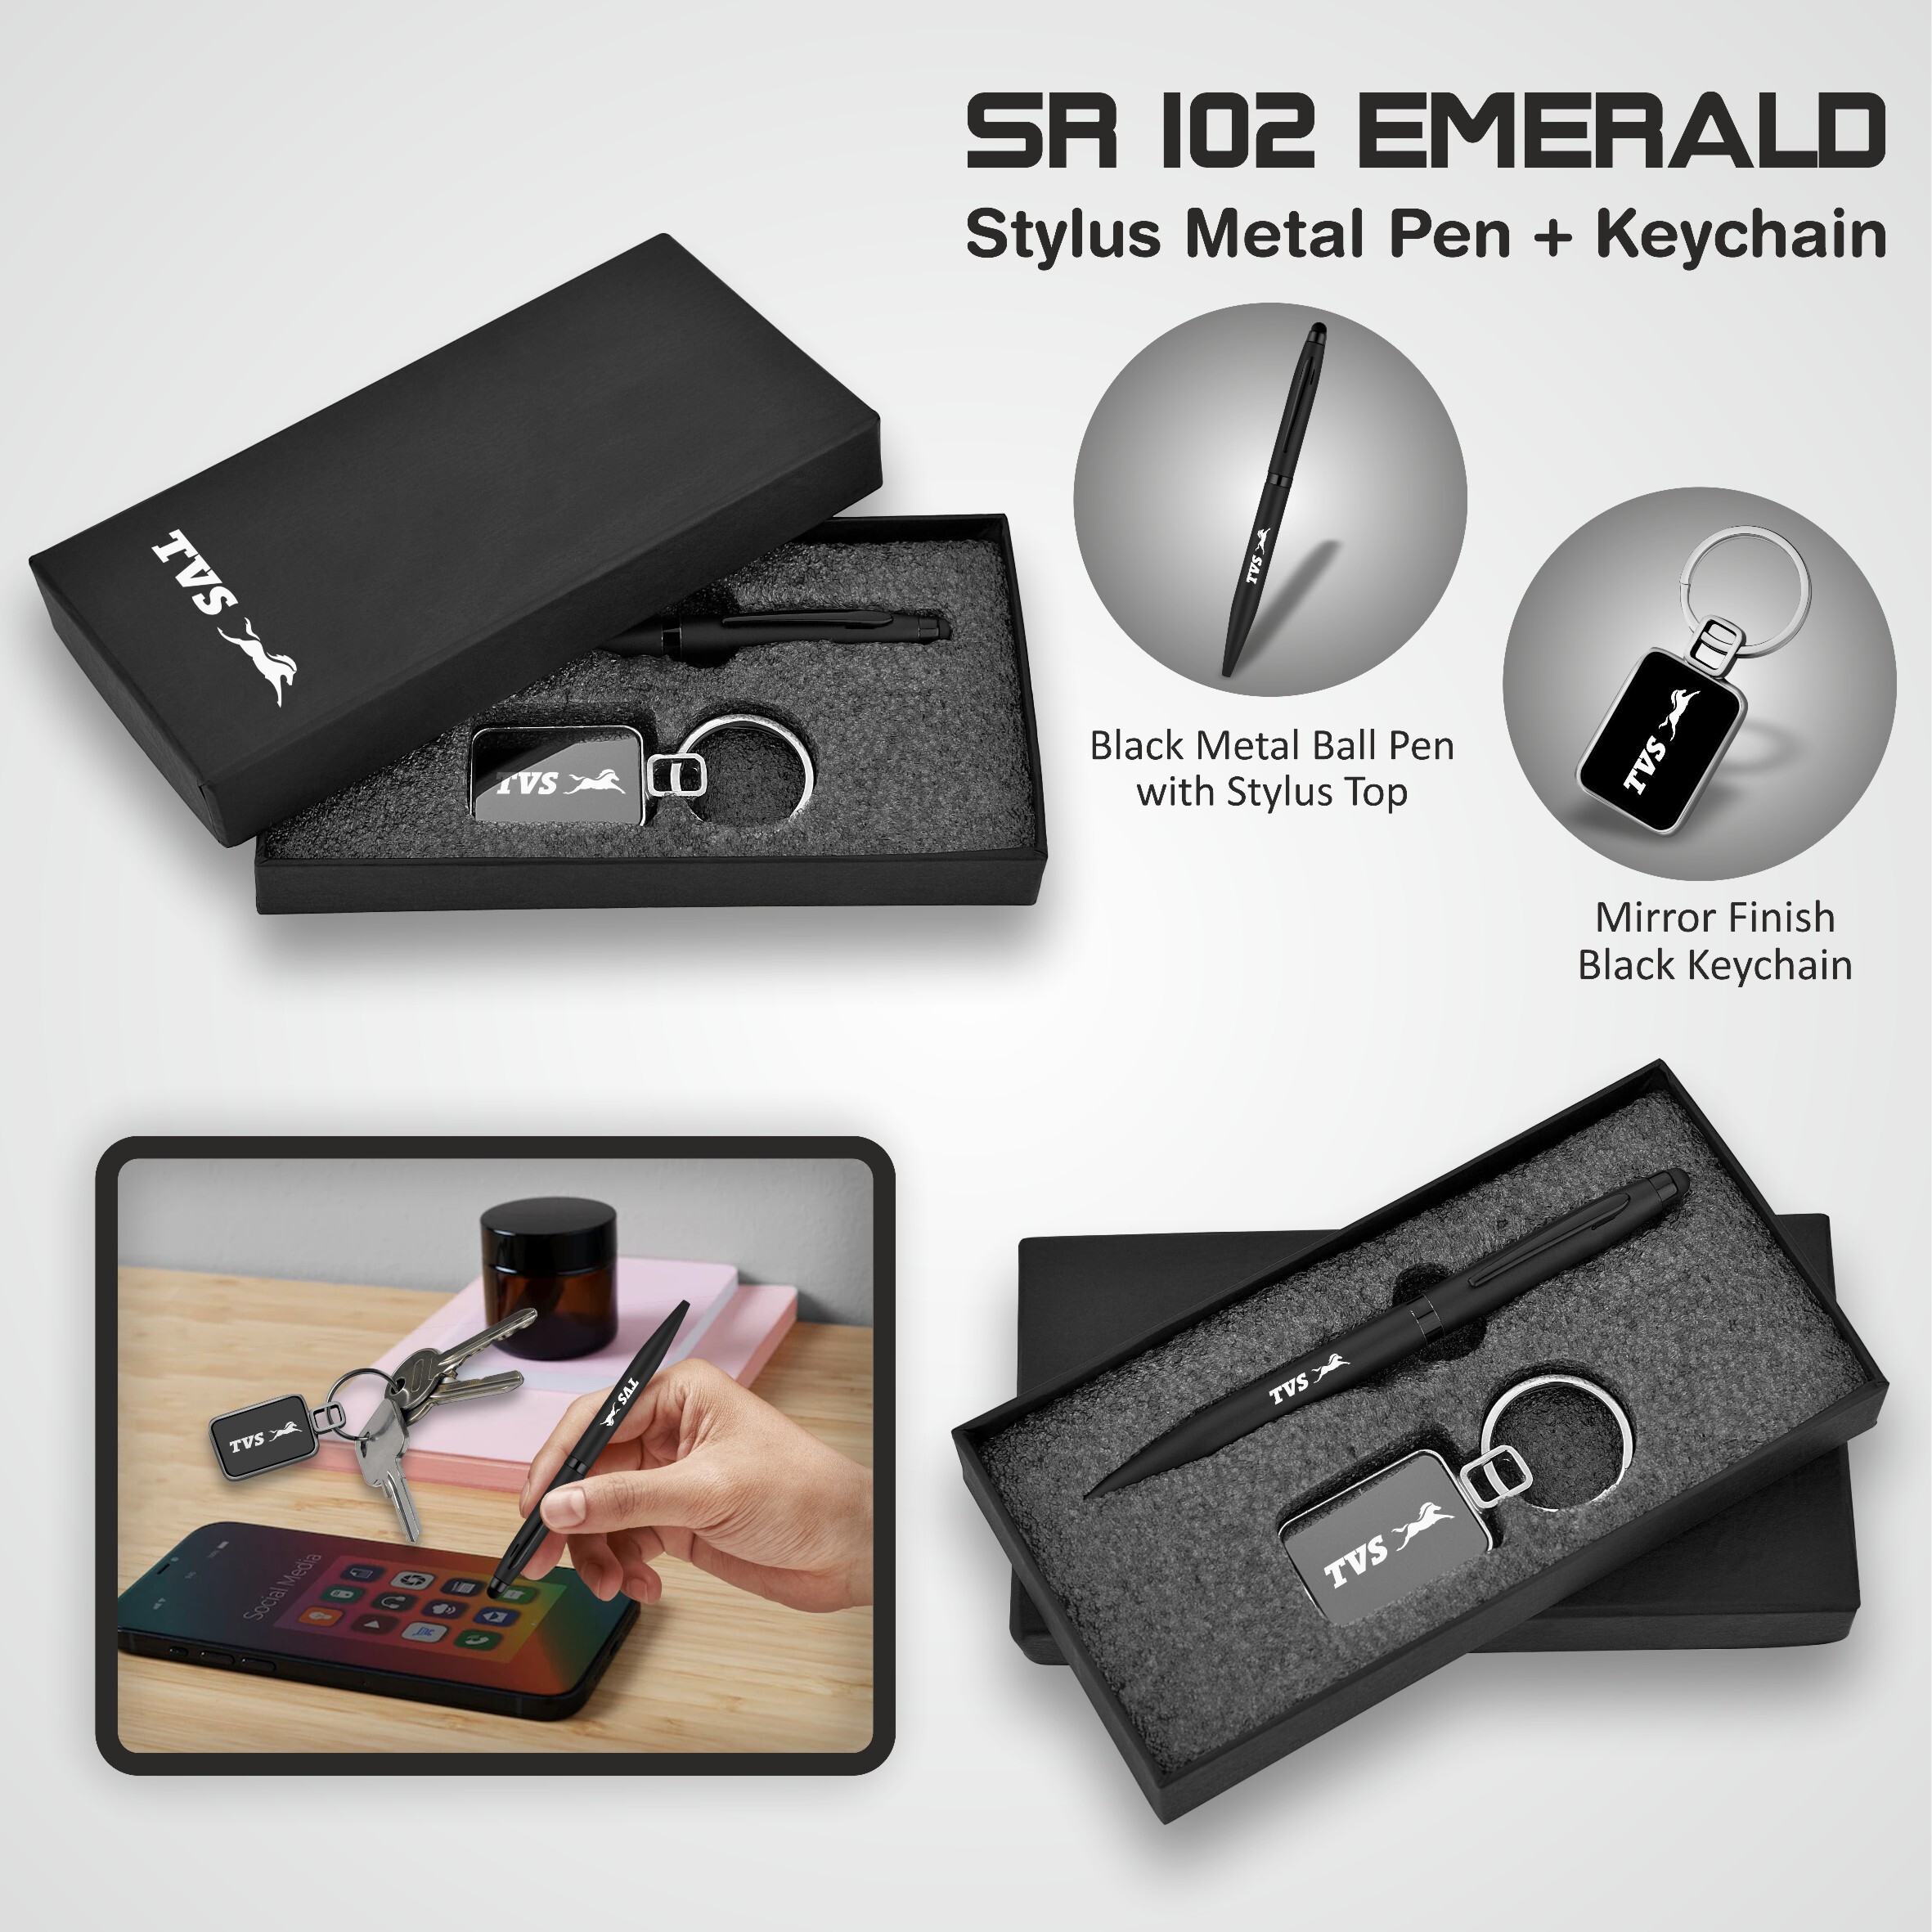 2 in 1 Pen Keychain Combo Gift Set Sr 102 Emerald